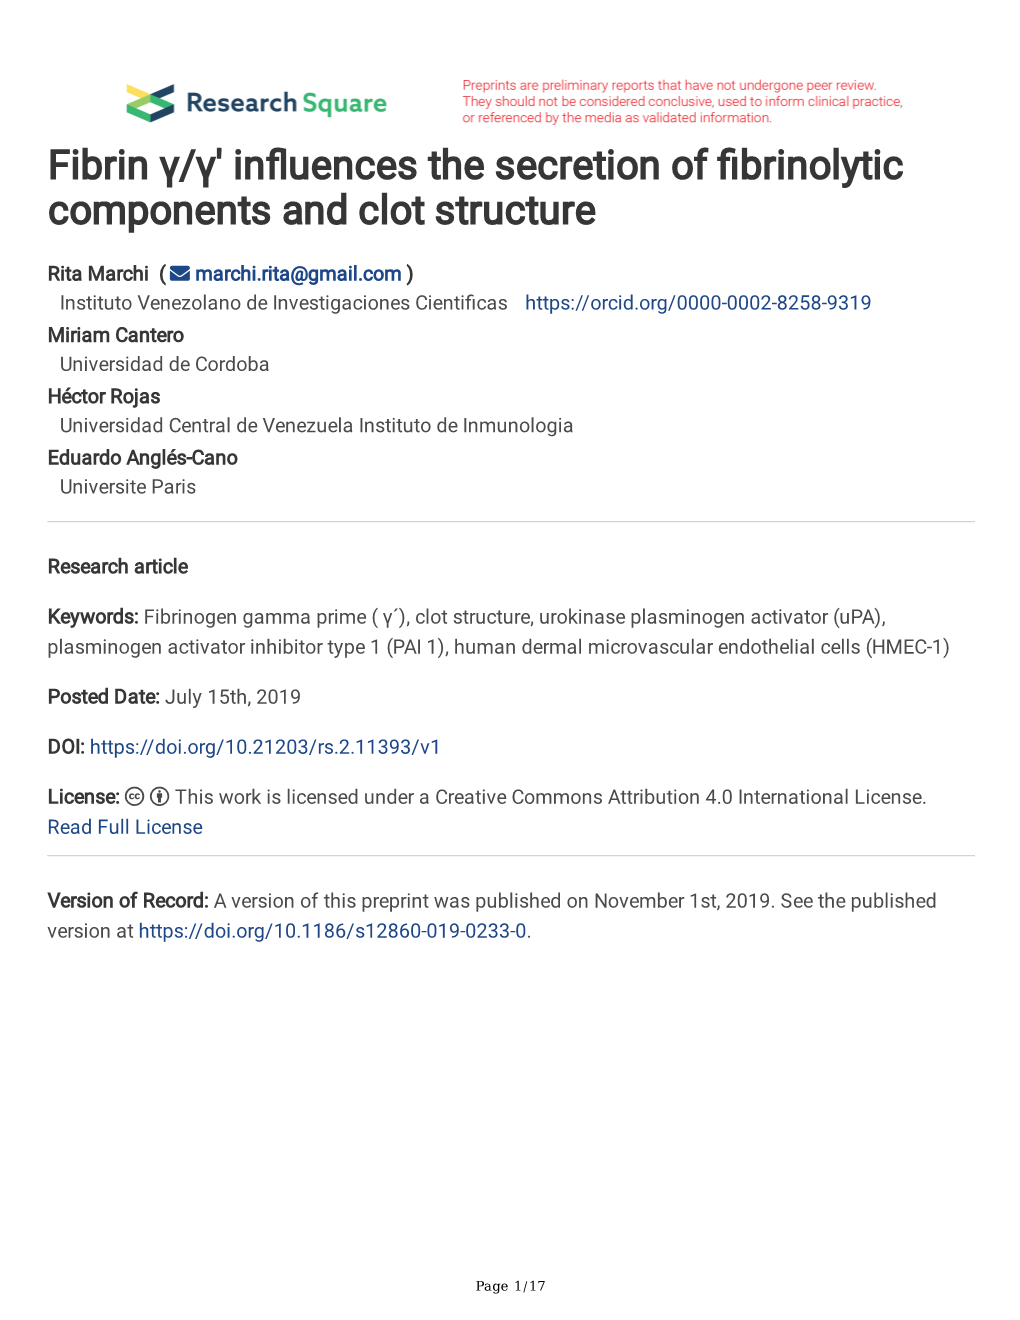 Fibrin Γ/Γ' Influences the Secretion of Fibrinolytic